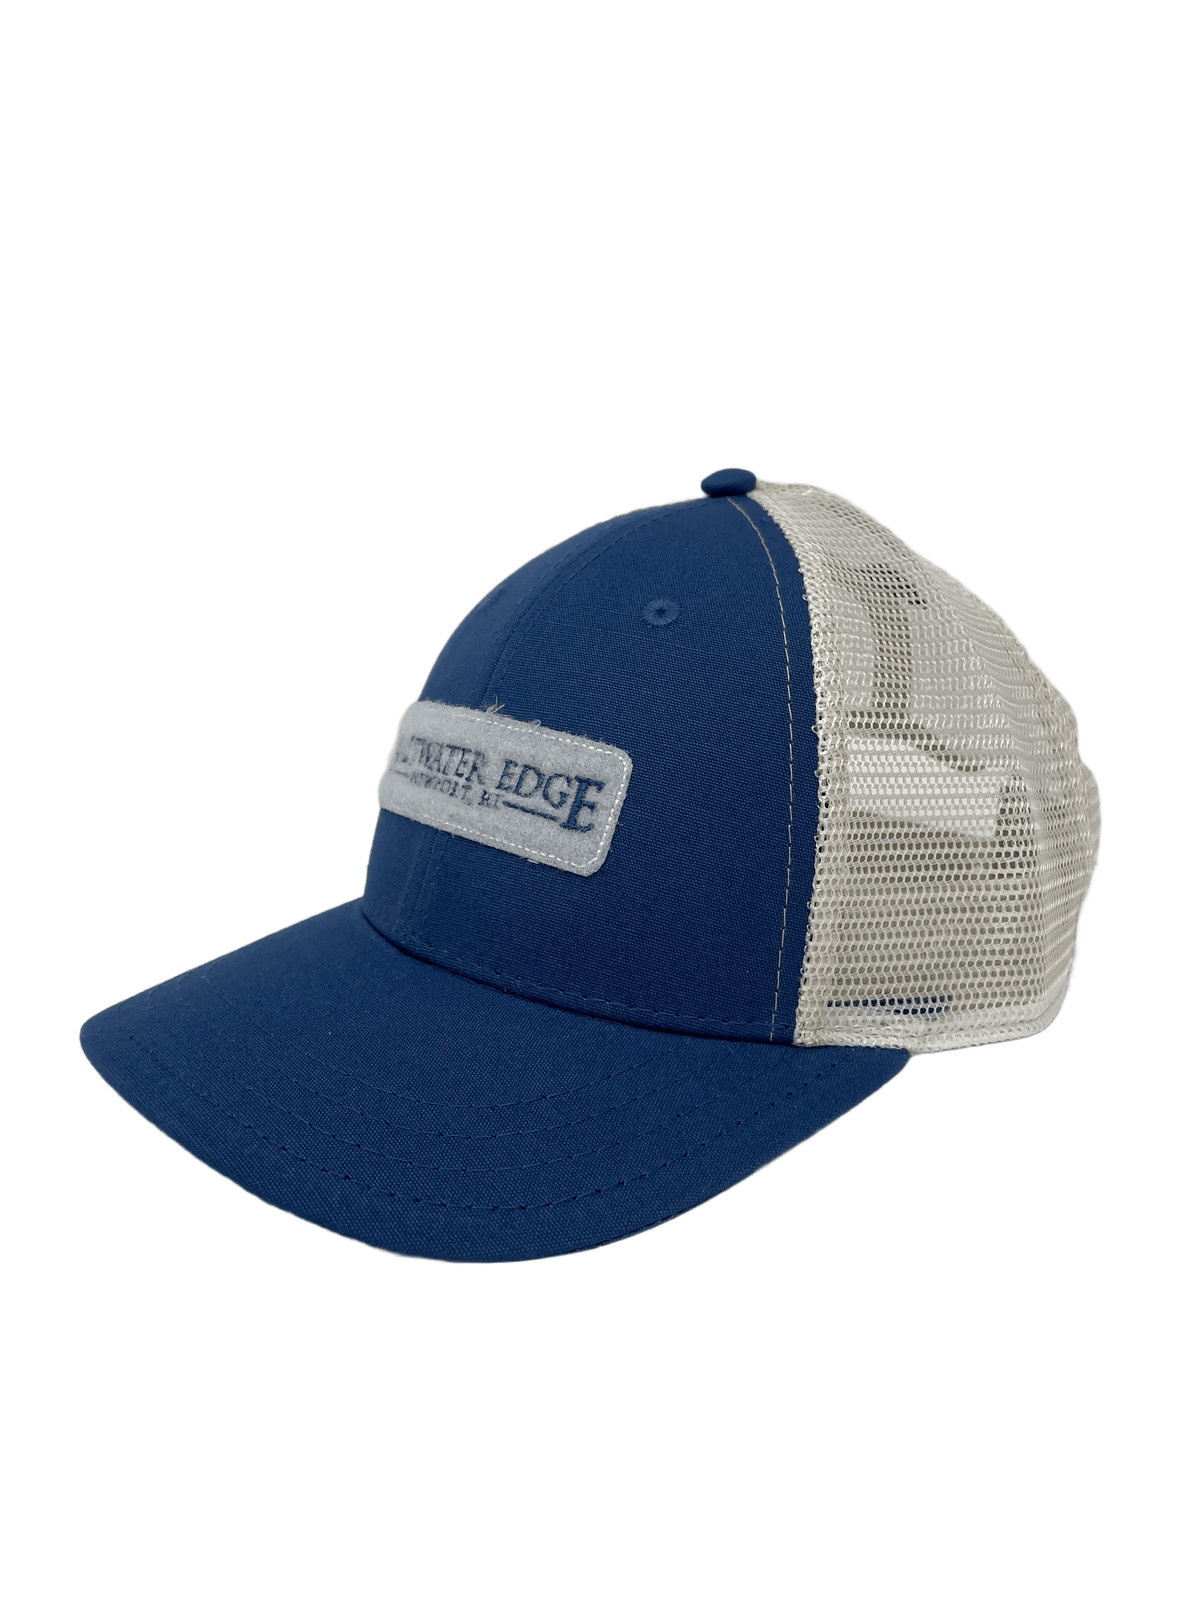 The Saltwater Edge Thames Street Patch Hat Cobalt Blue